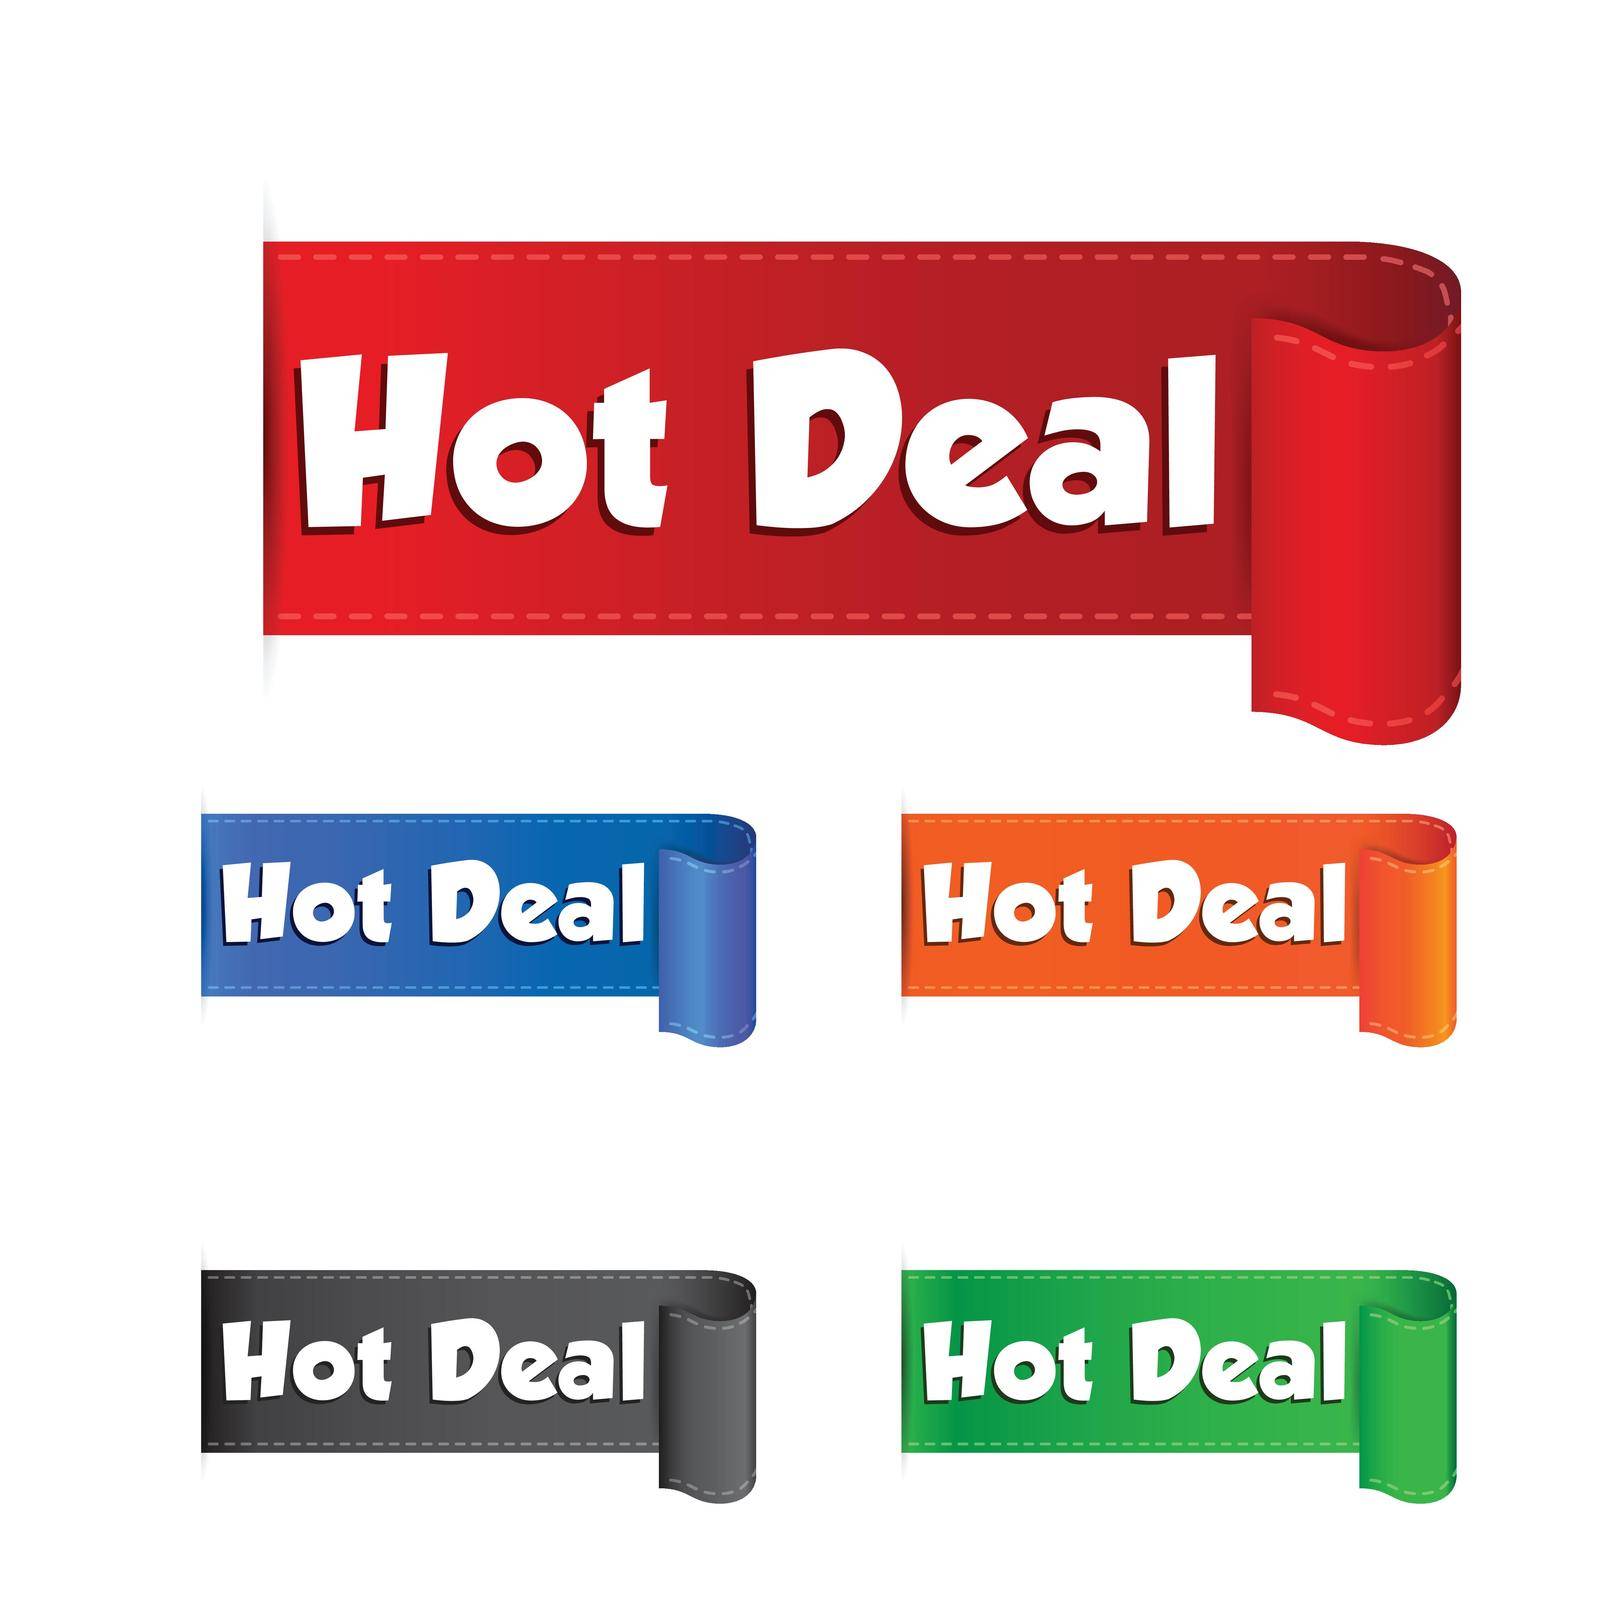 Hot deal sticker. Label vector illustration on white background by LysenkoA